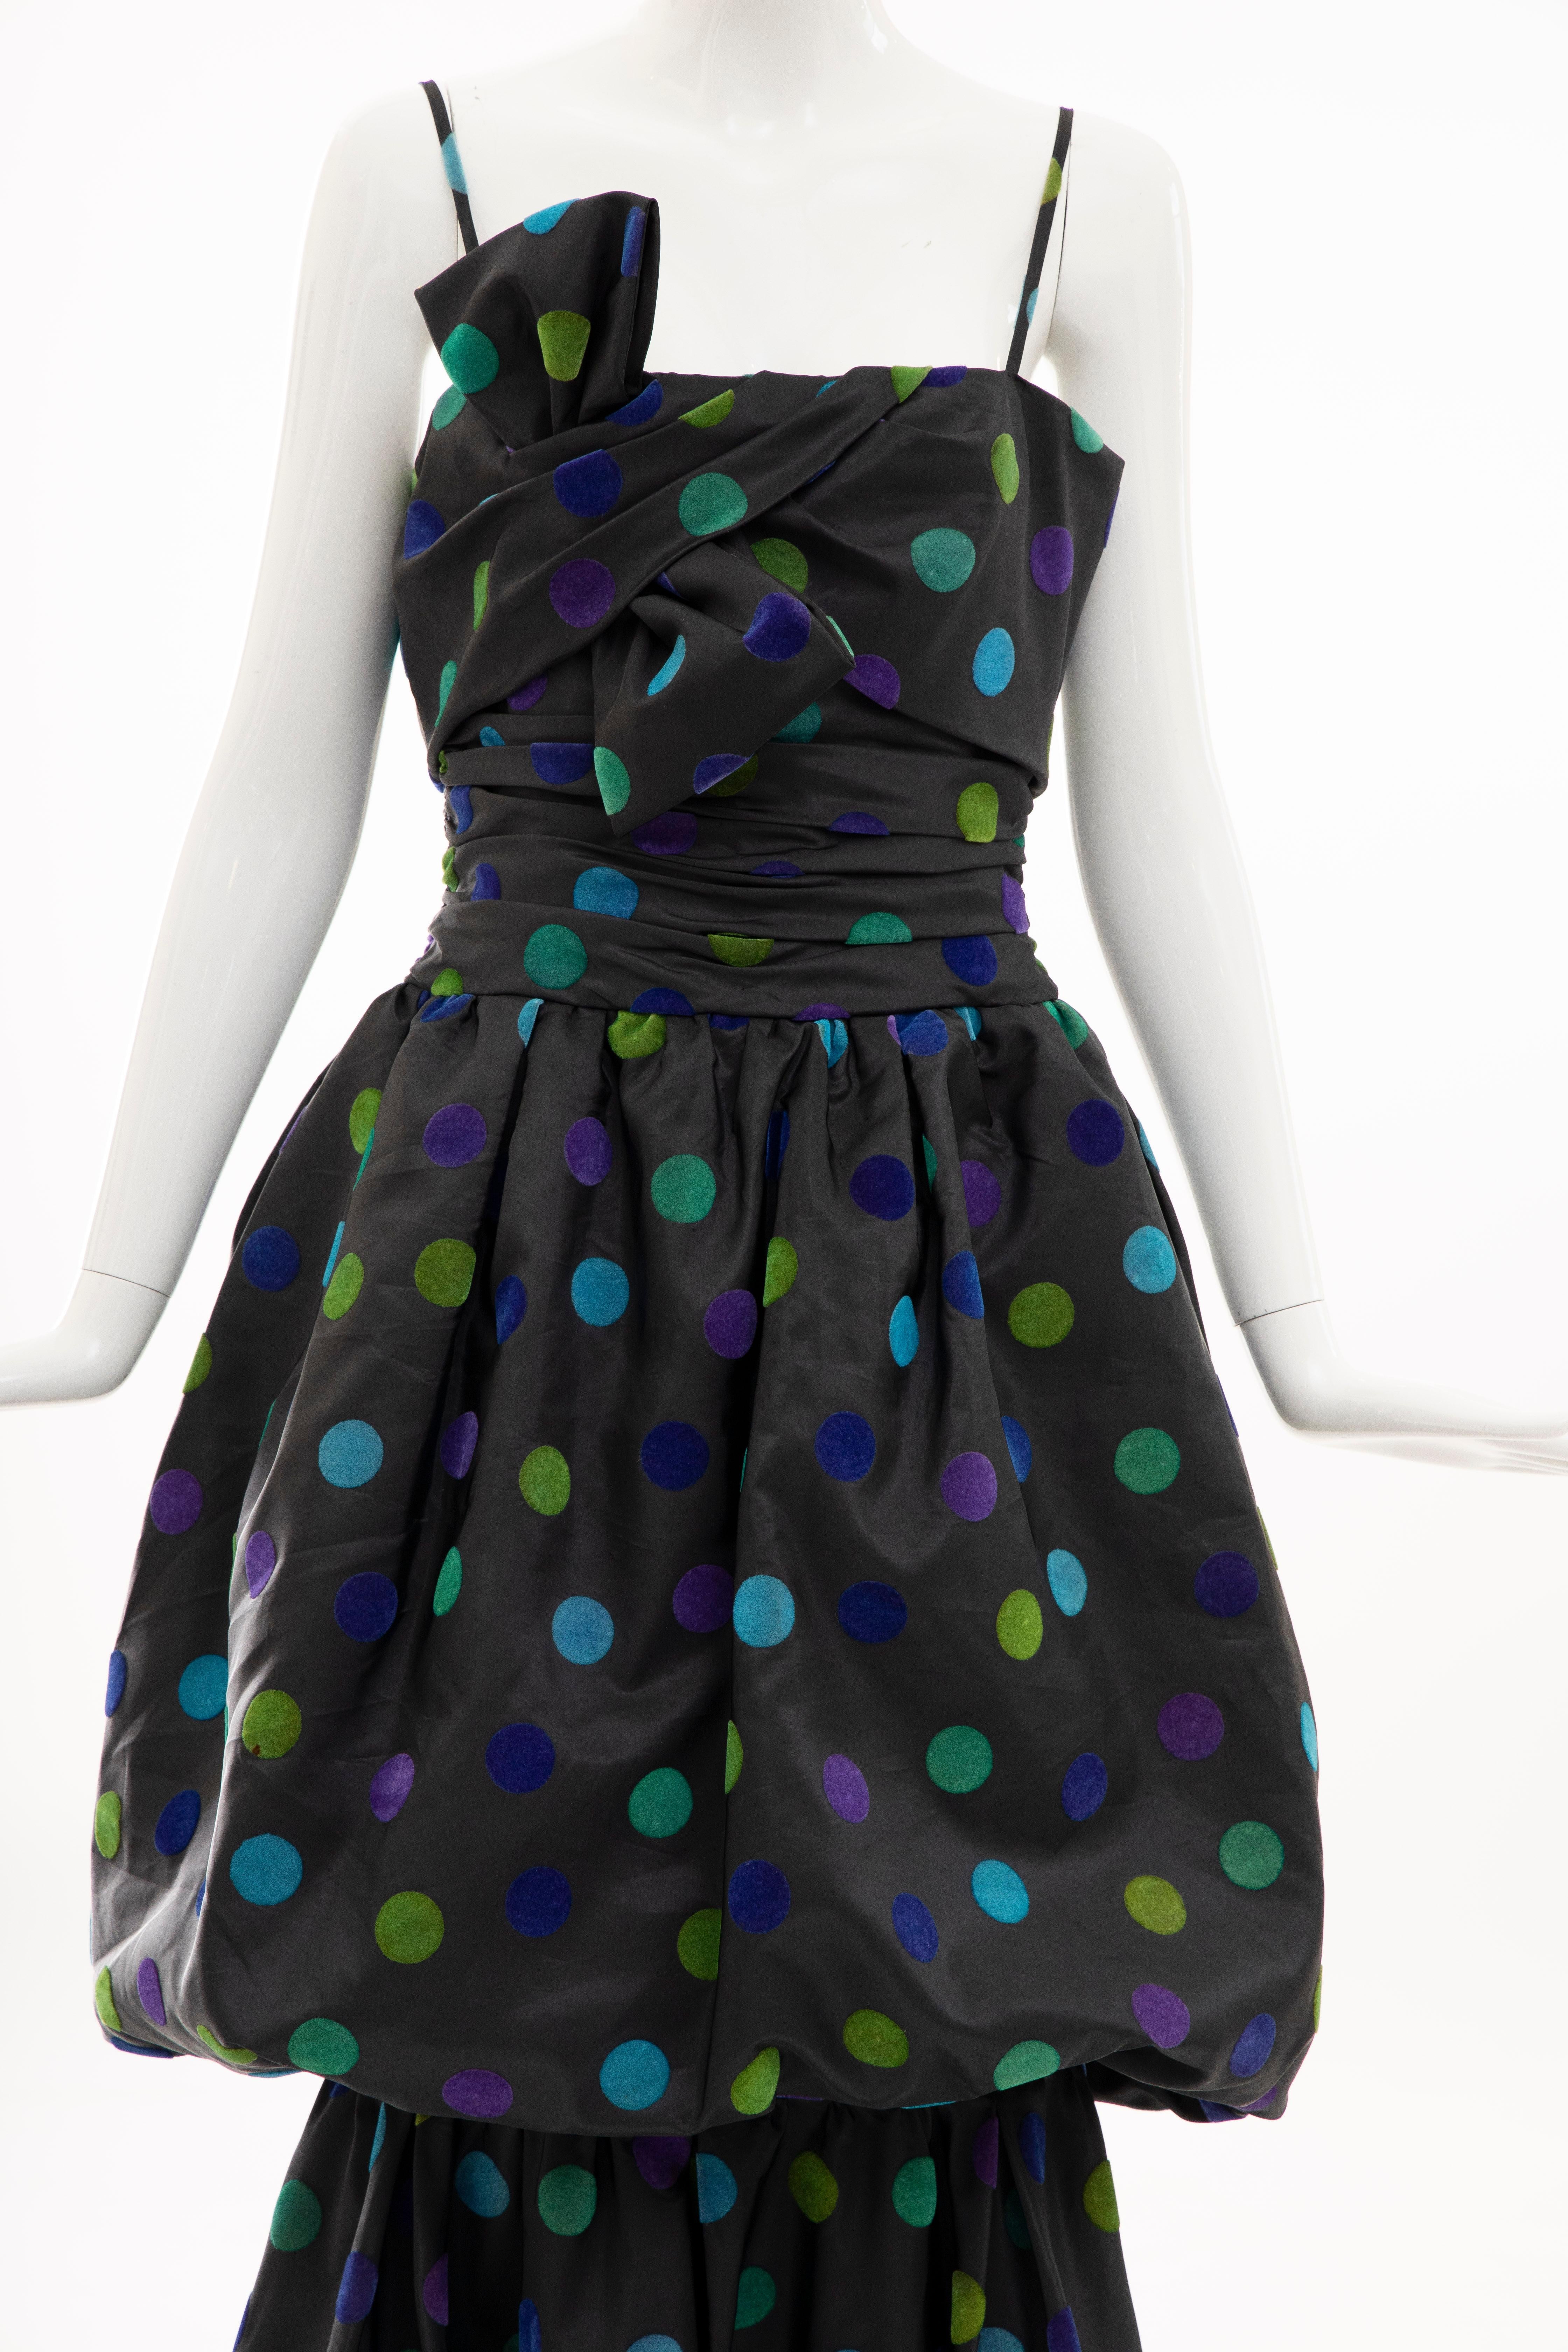 Women's Nina Ricci Black Taffeta Velveteen Polka Dots Evening Dress, Circa: 1980s